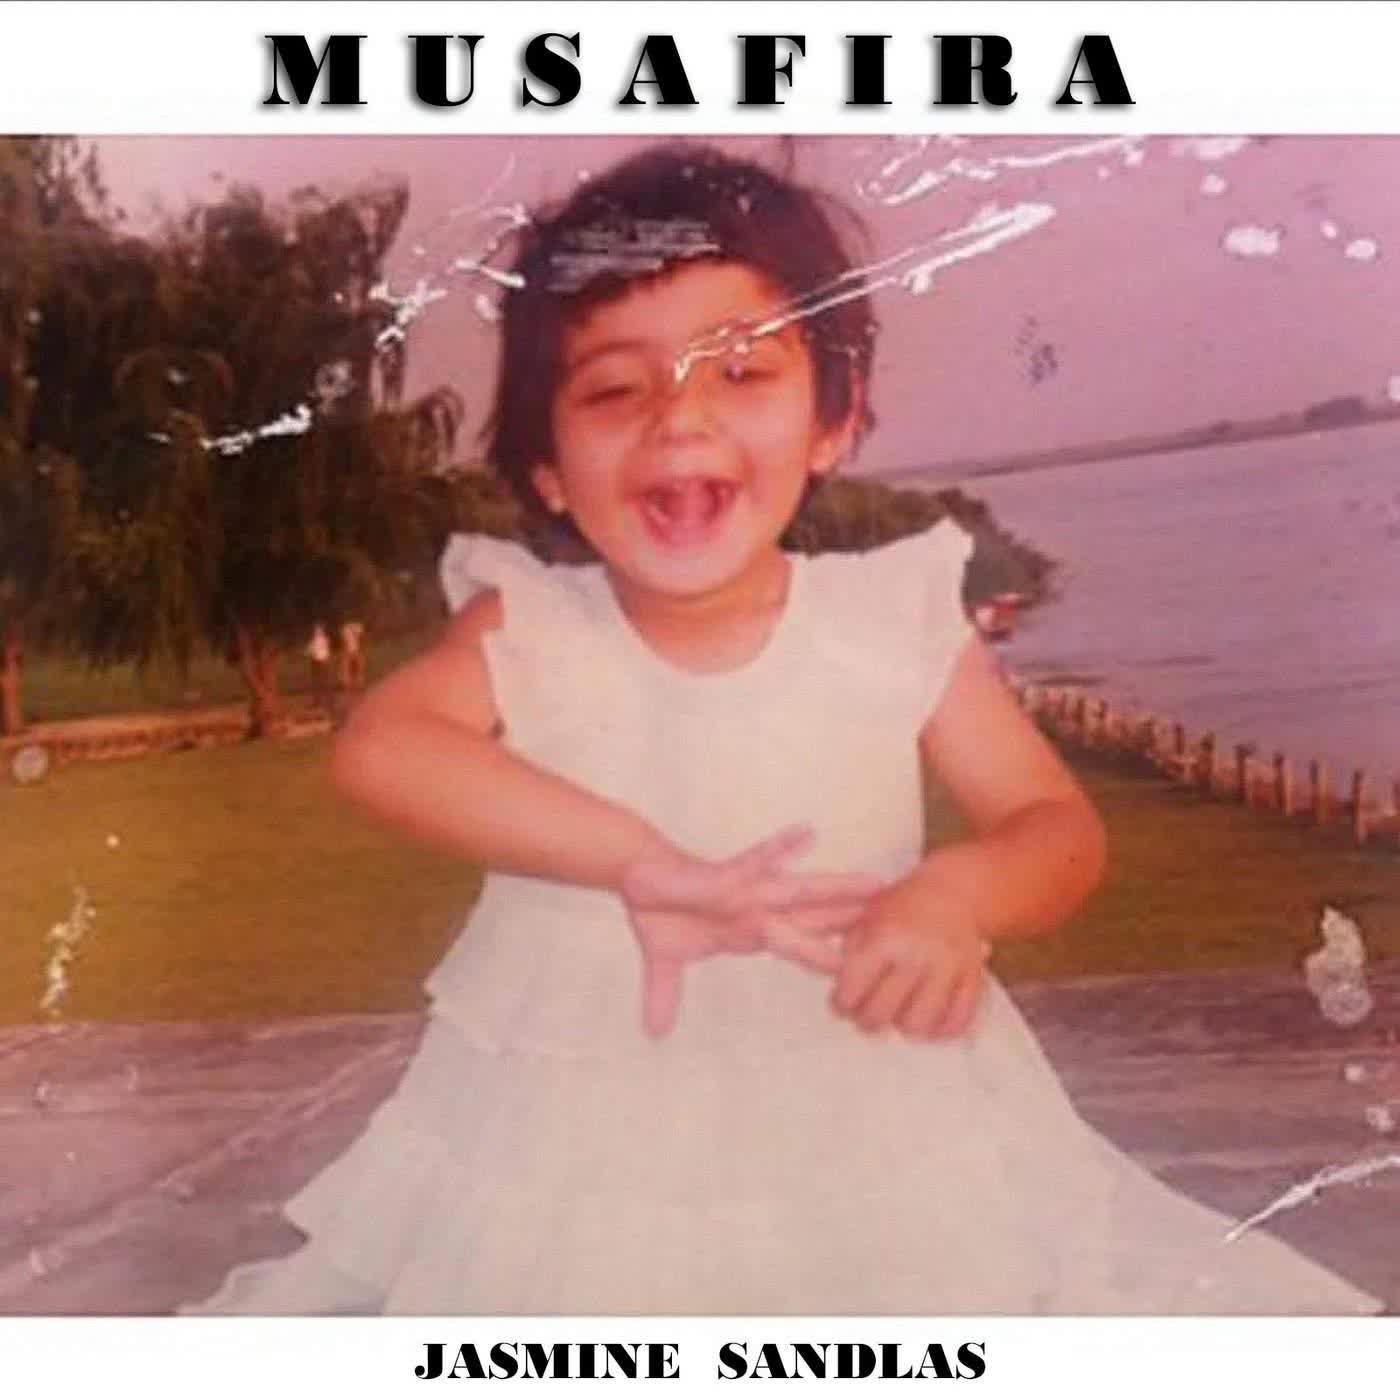 Musafira Jasmine Sandlas  Mp3 song download